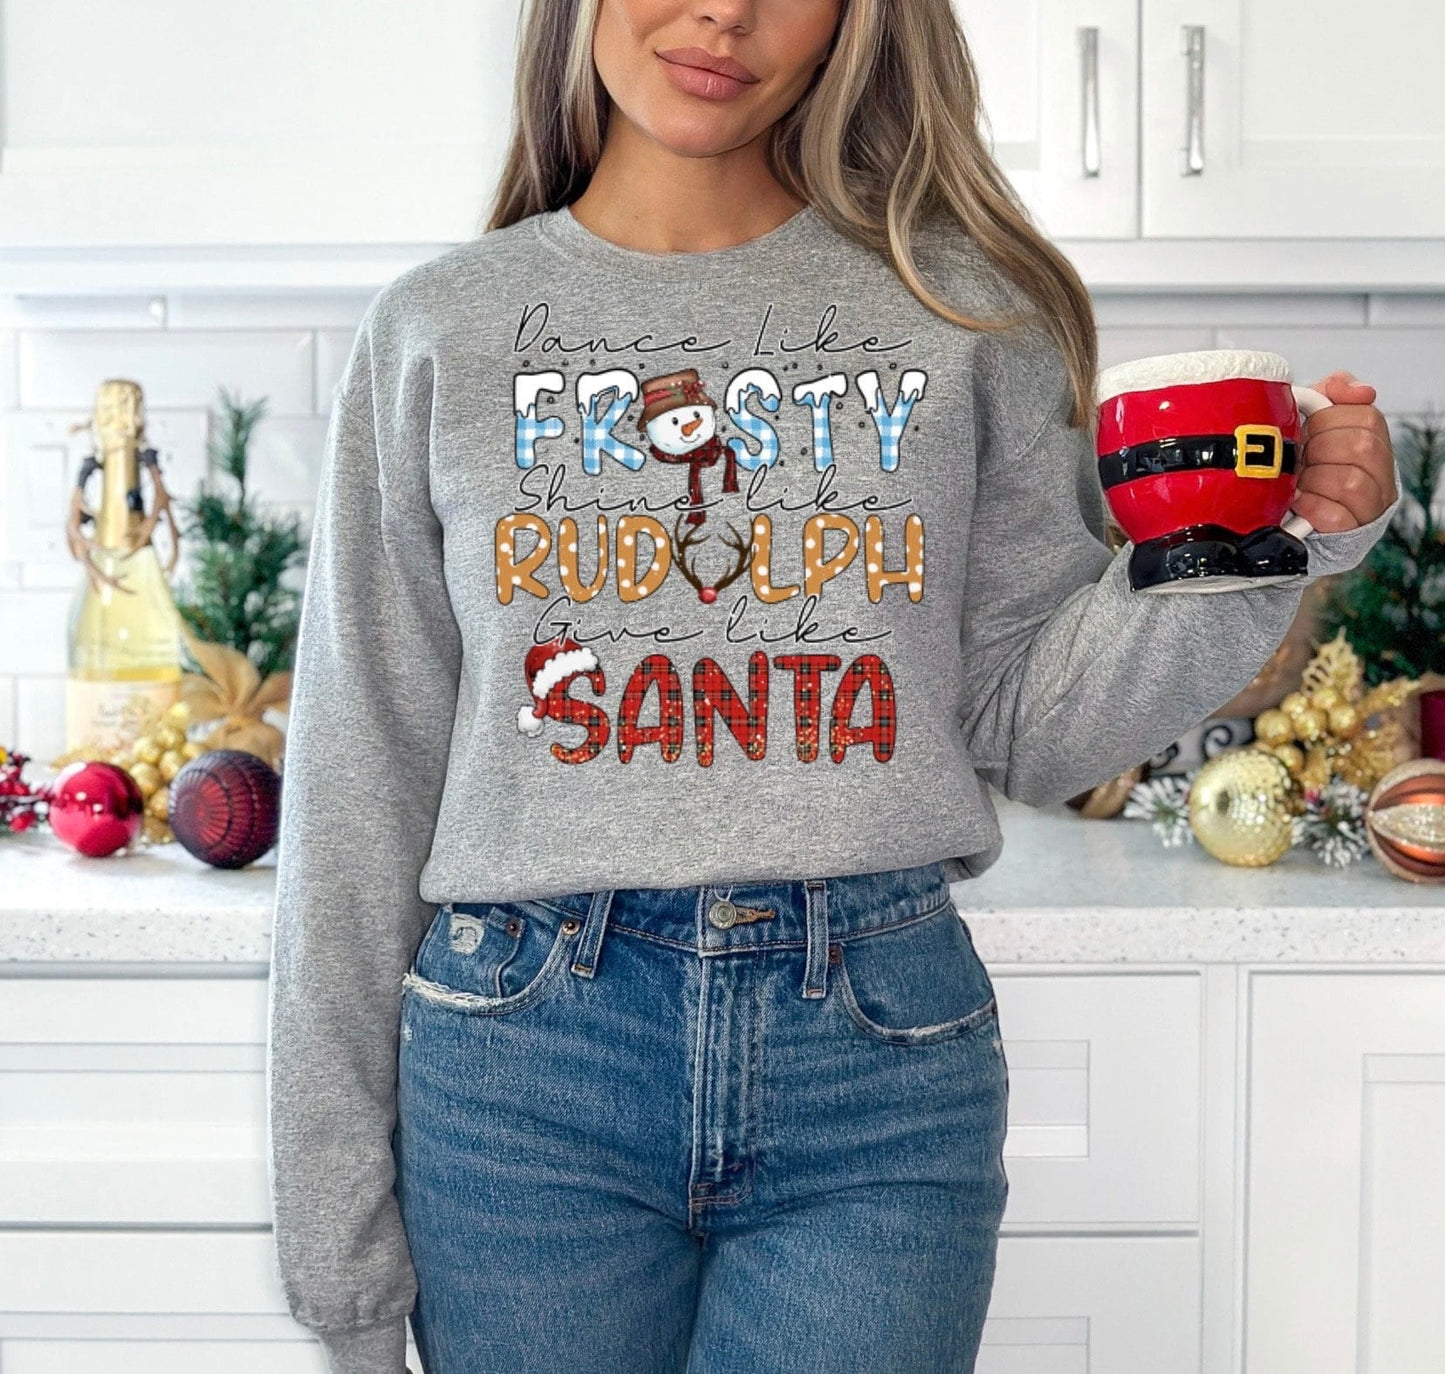 Dance Like Frosty Shine like Rudolph Give like Santa Shirt, Cute Christmas Sweatshirt, Christmas Shirt, Holiday Xmas Tee, Snowman Sweater